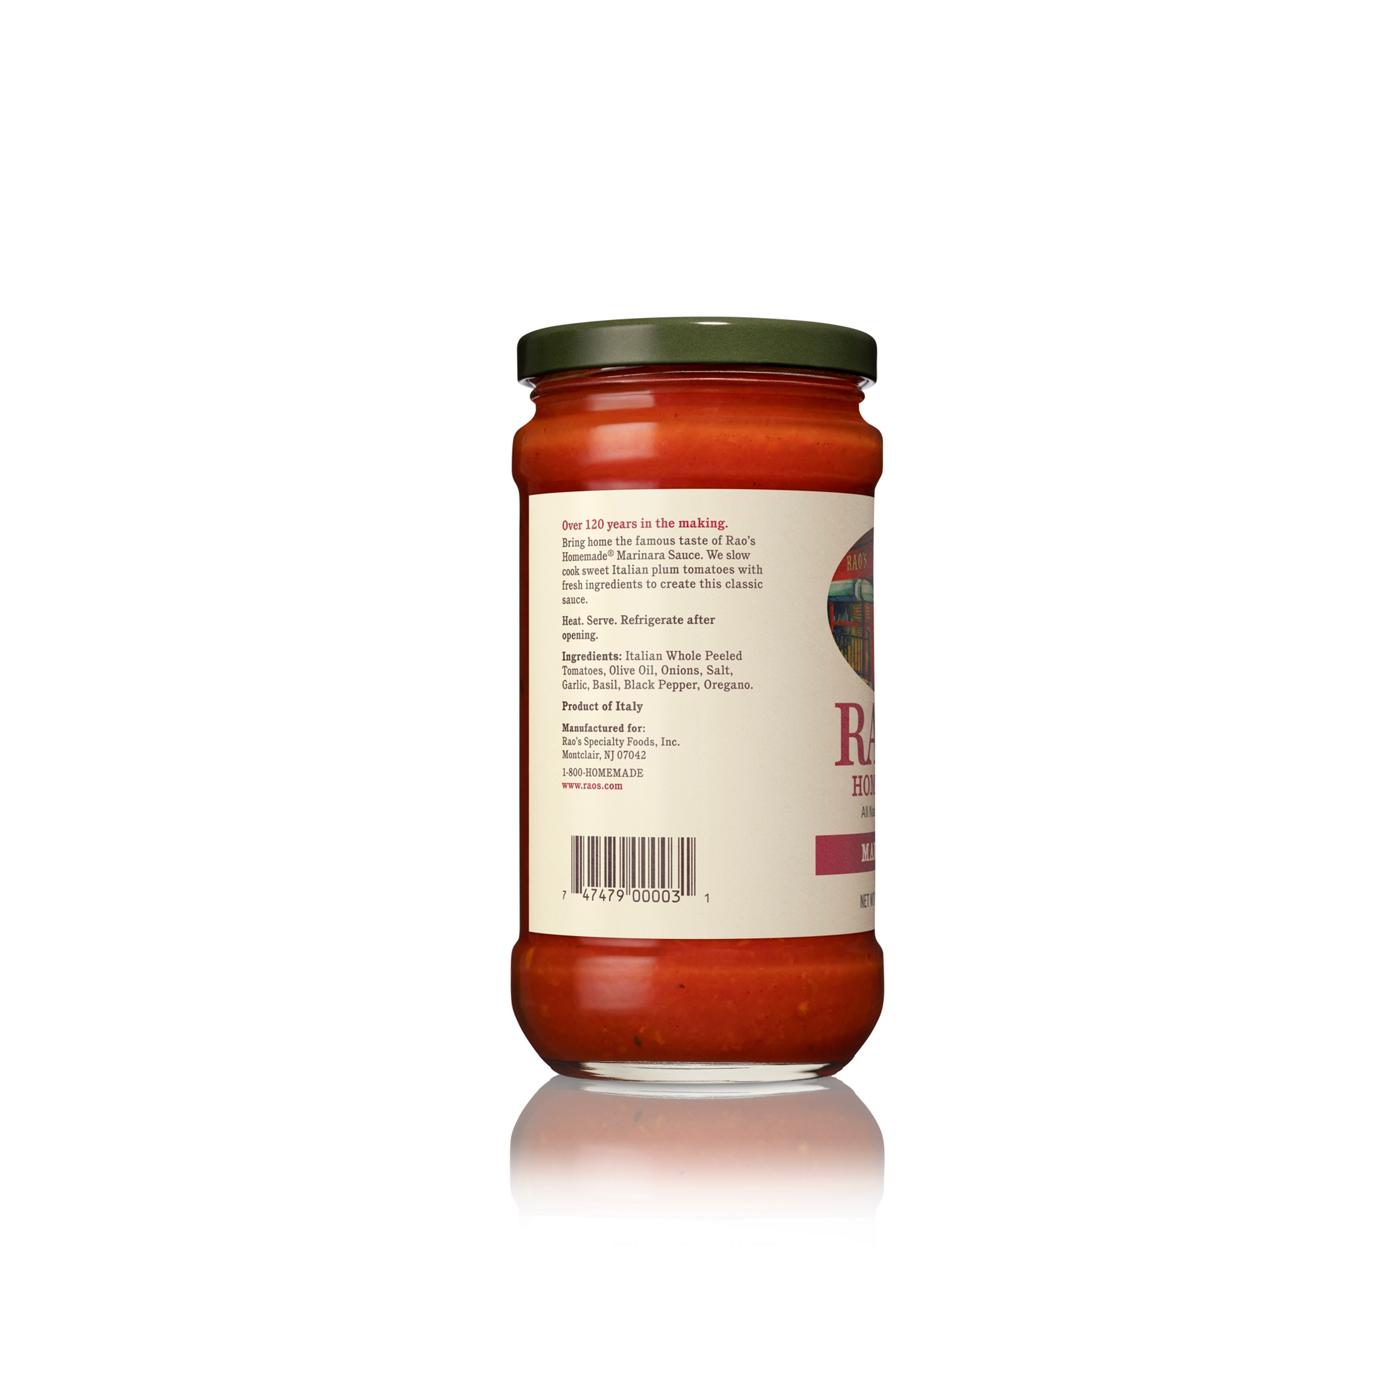 Rao's Homemade Marinara Tomato Sauce; image 2 of 5